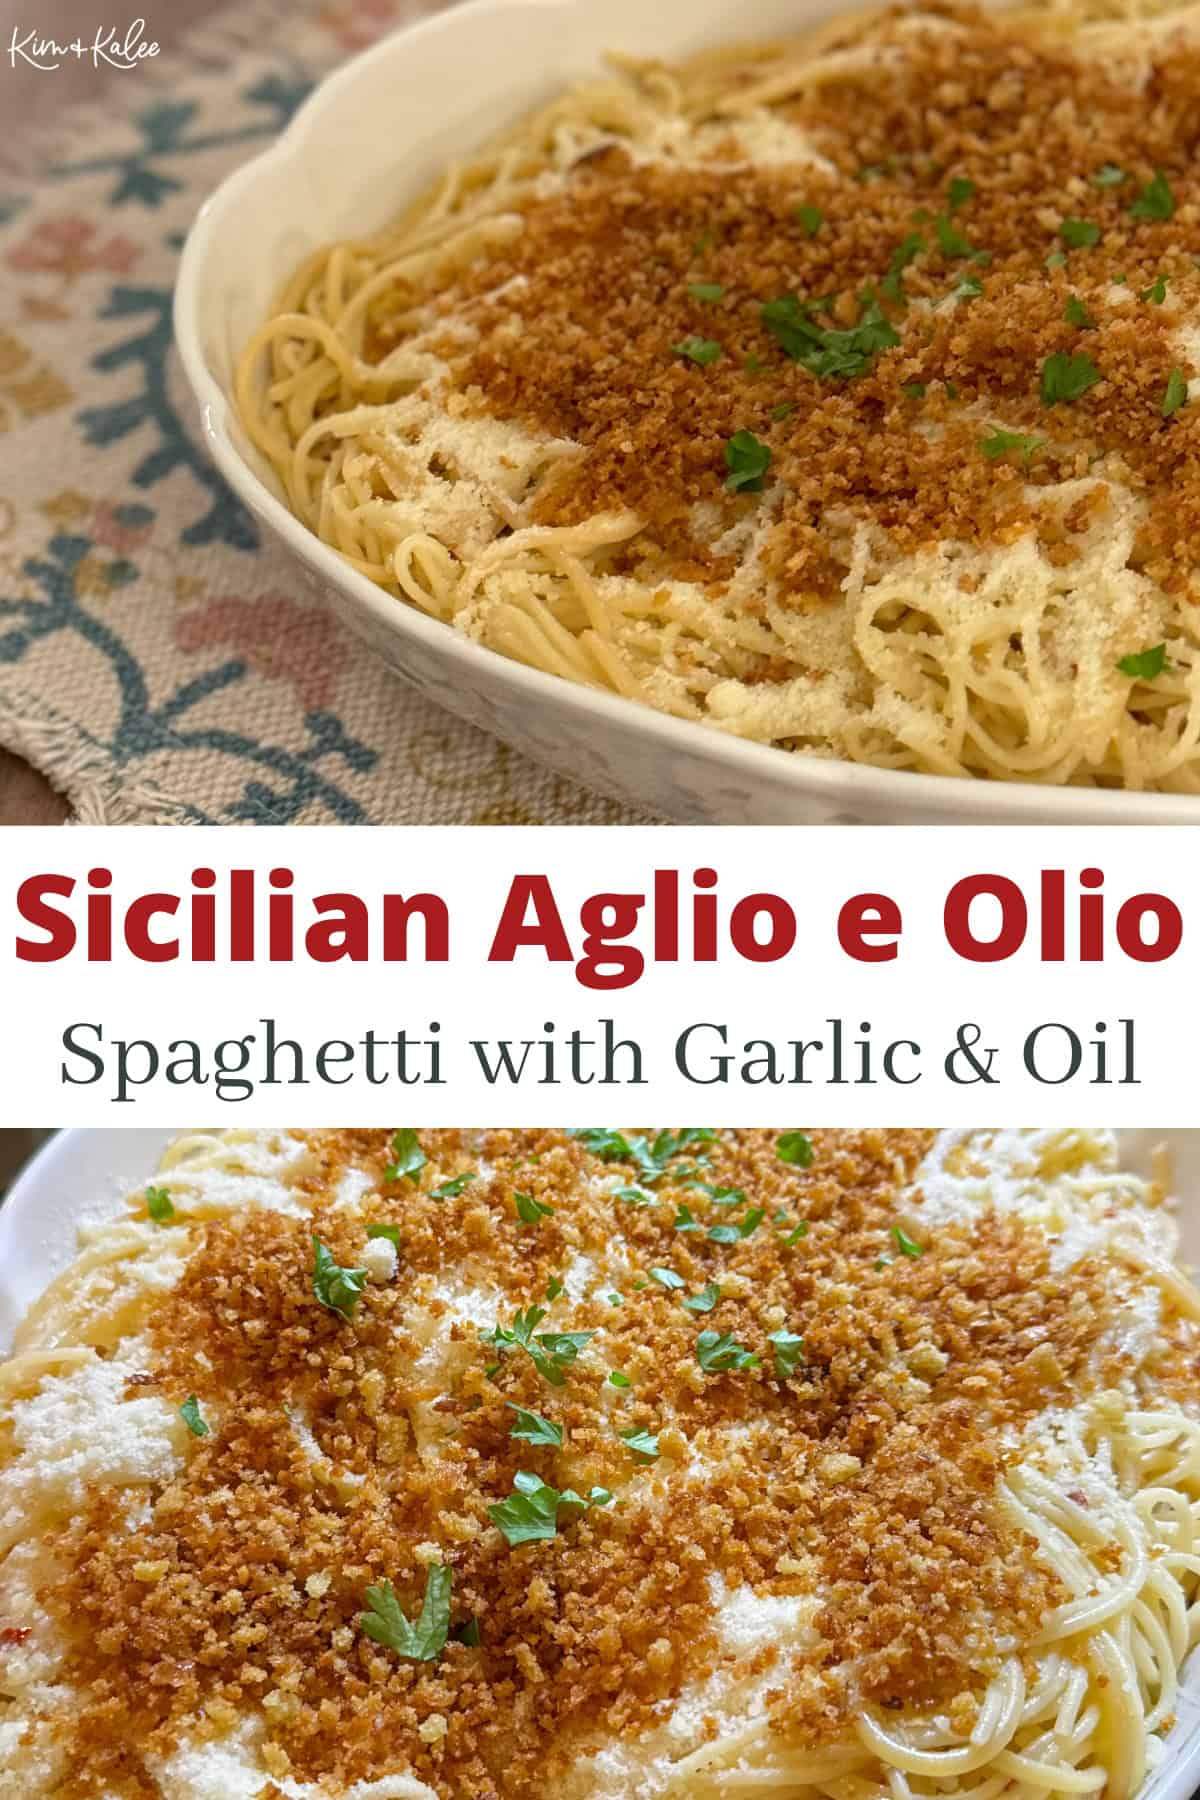 collage of the finished pasta dish - text overlay says Sicilian Aglio e Olio Spaghetti with Garlic and Oil